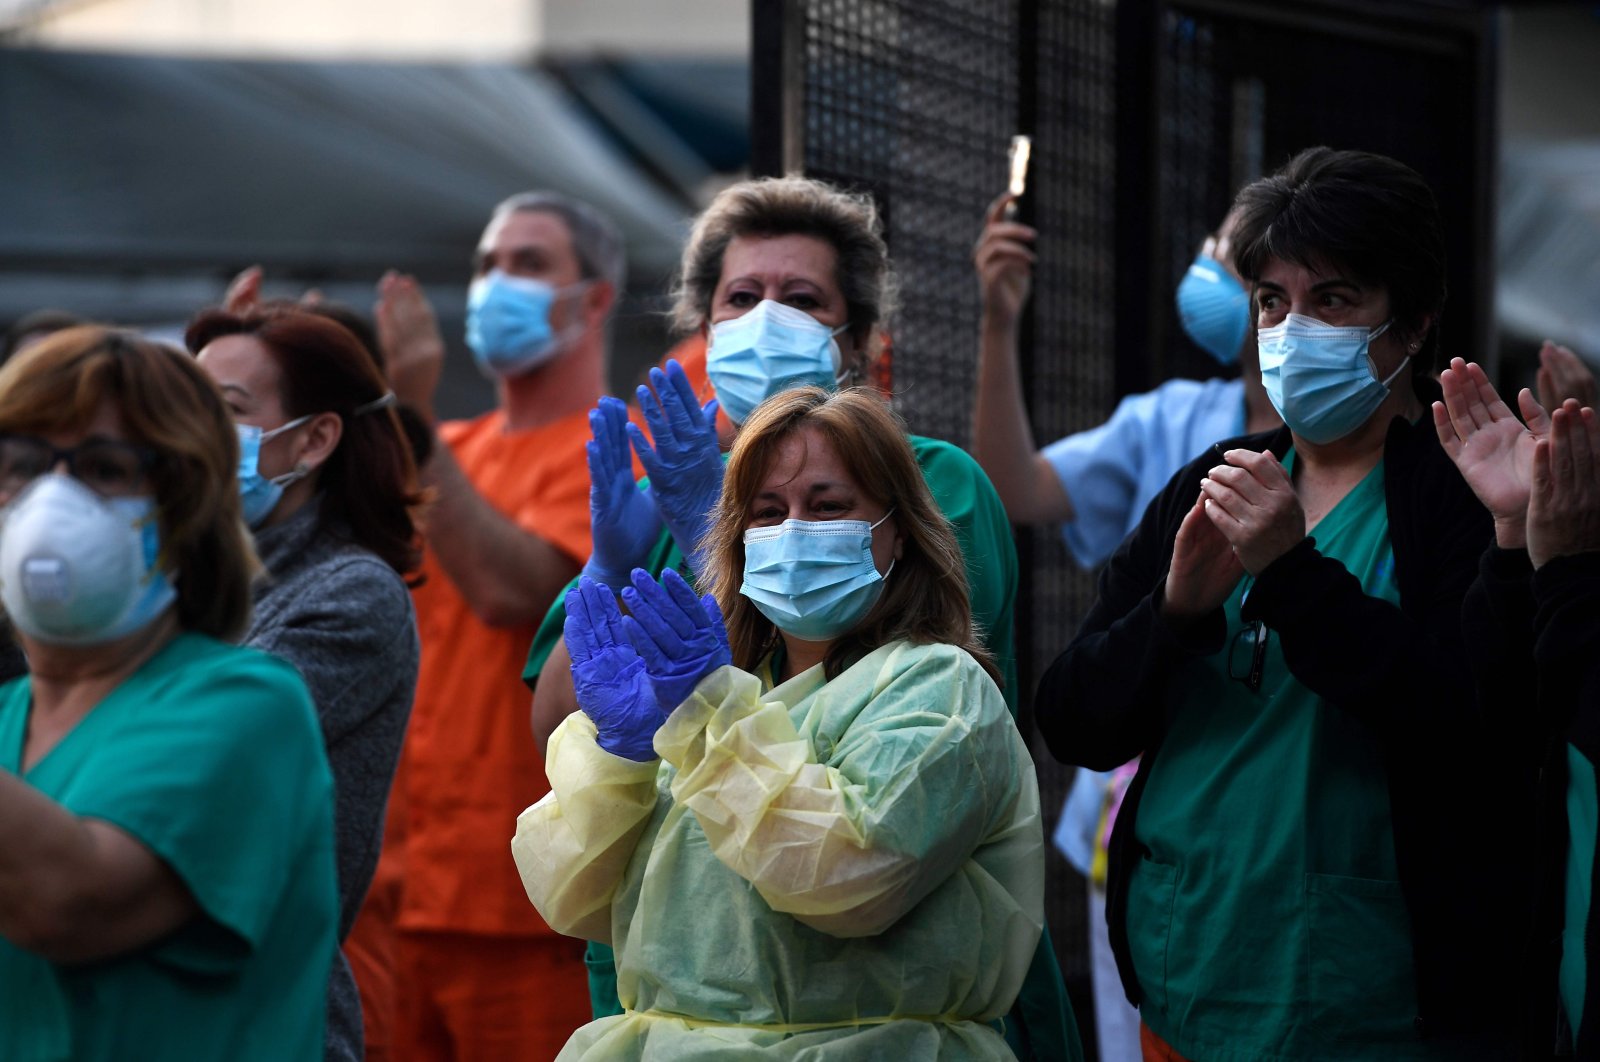 Heath care workers applaud amid grateful cheers outside Gregorio Maranon hospital, Madrid, April 12, 2020. (AFP Photo)